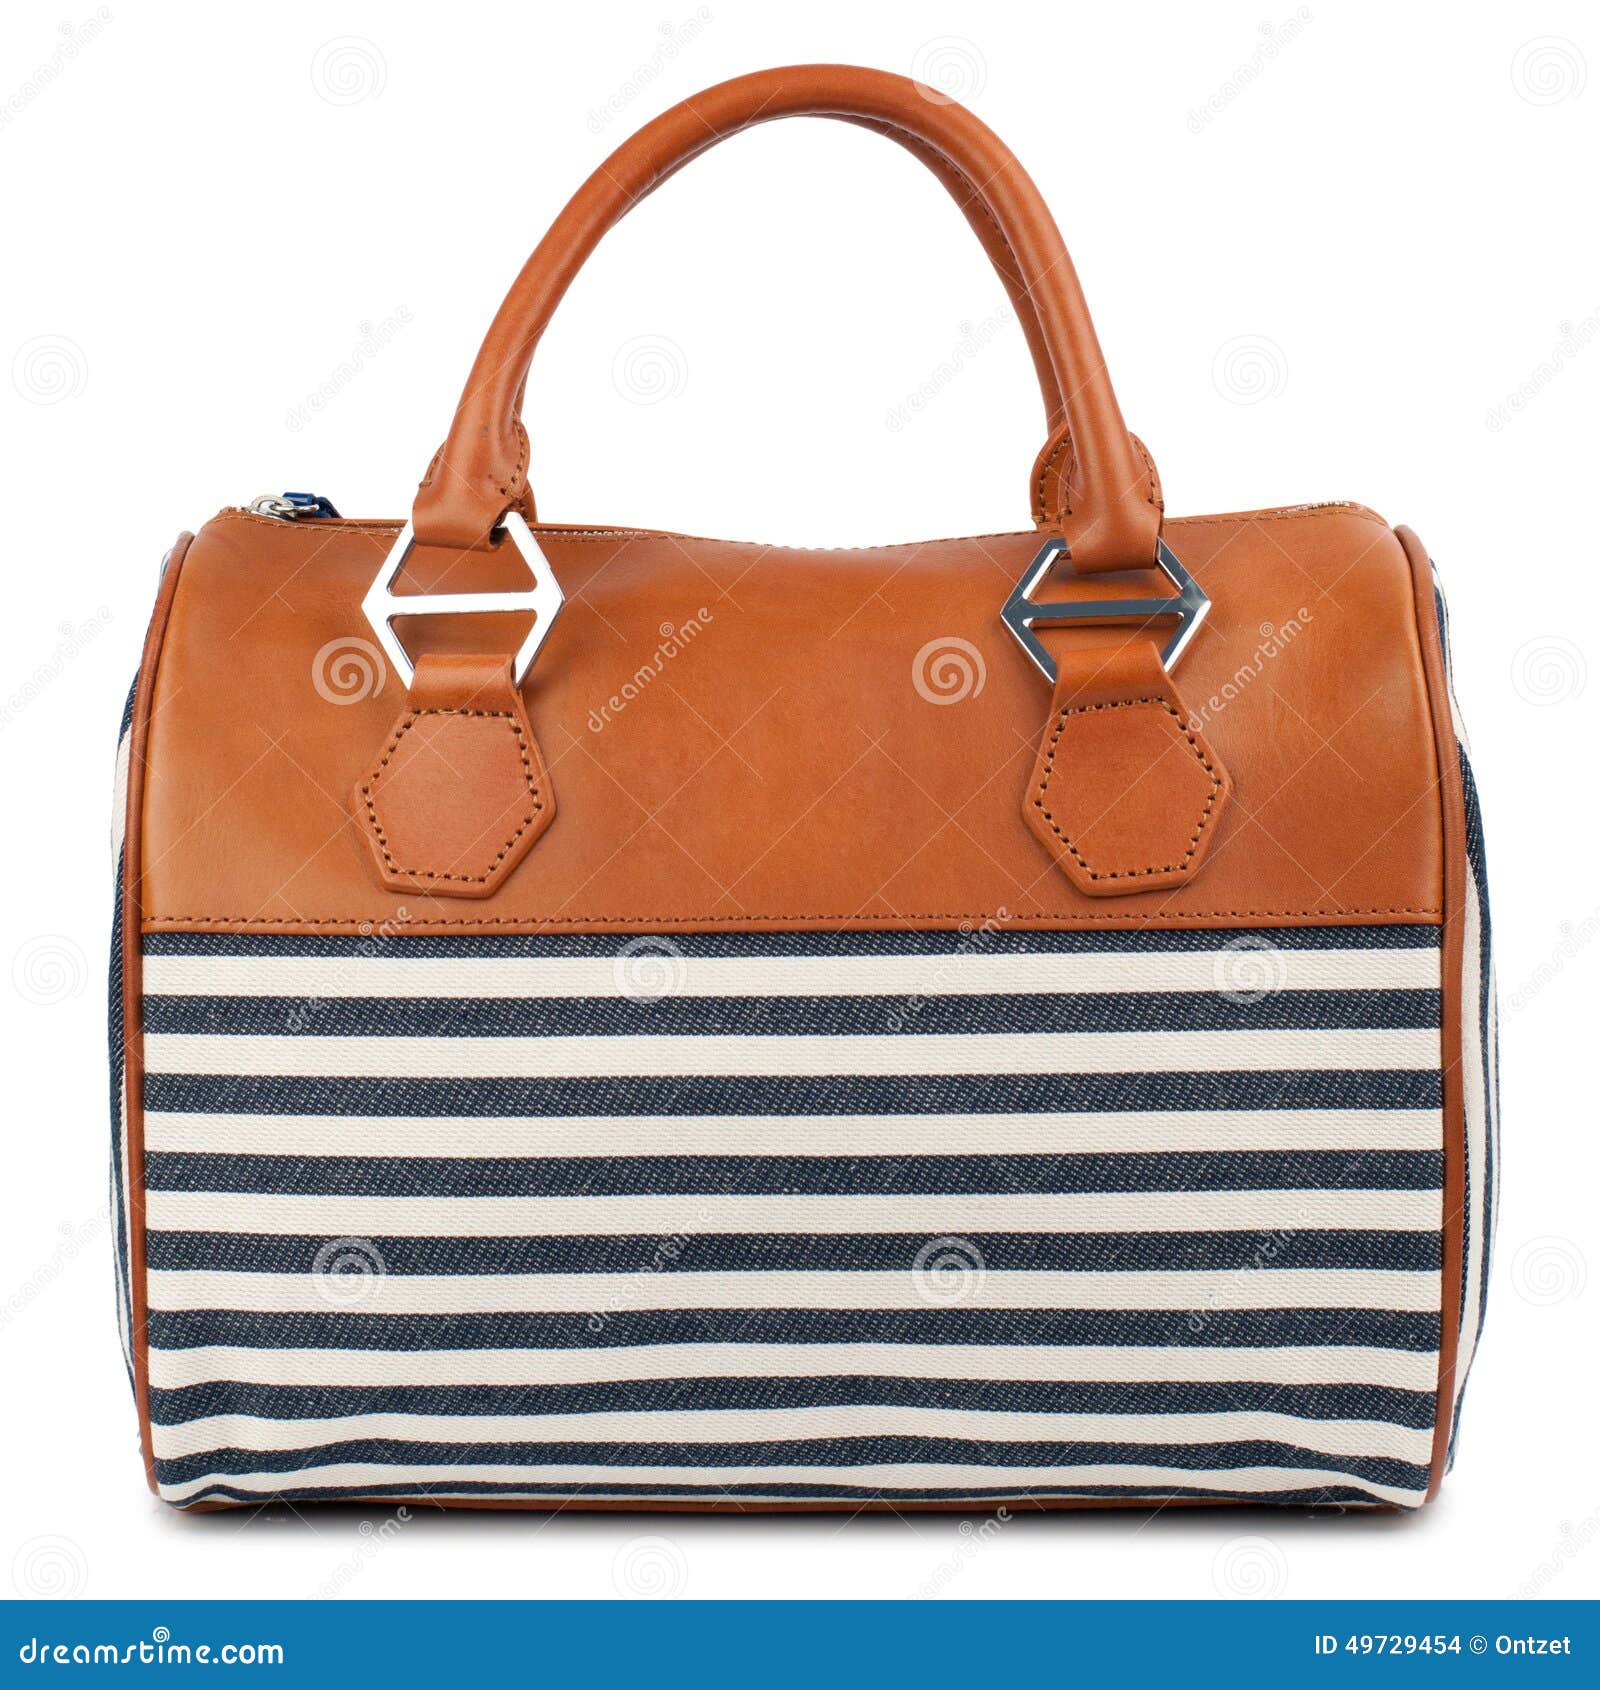 striped handbag  on white background.